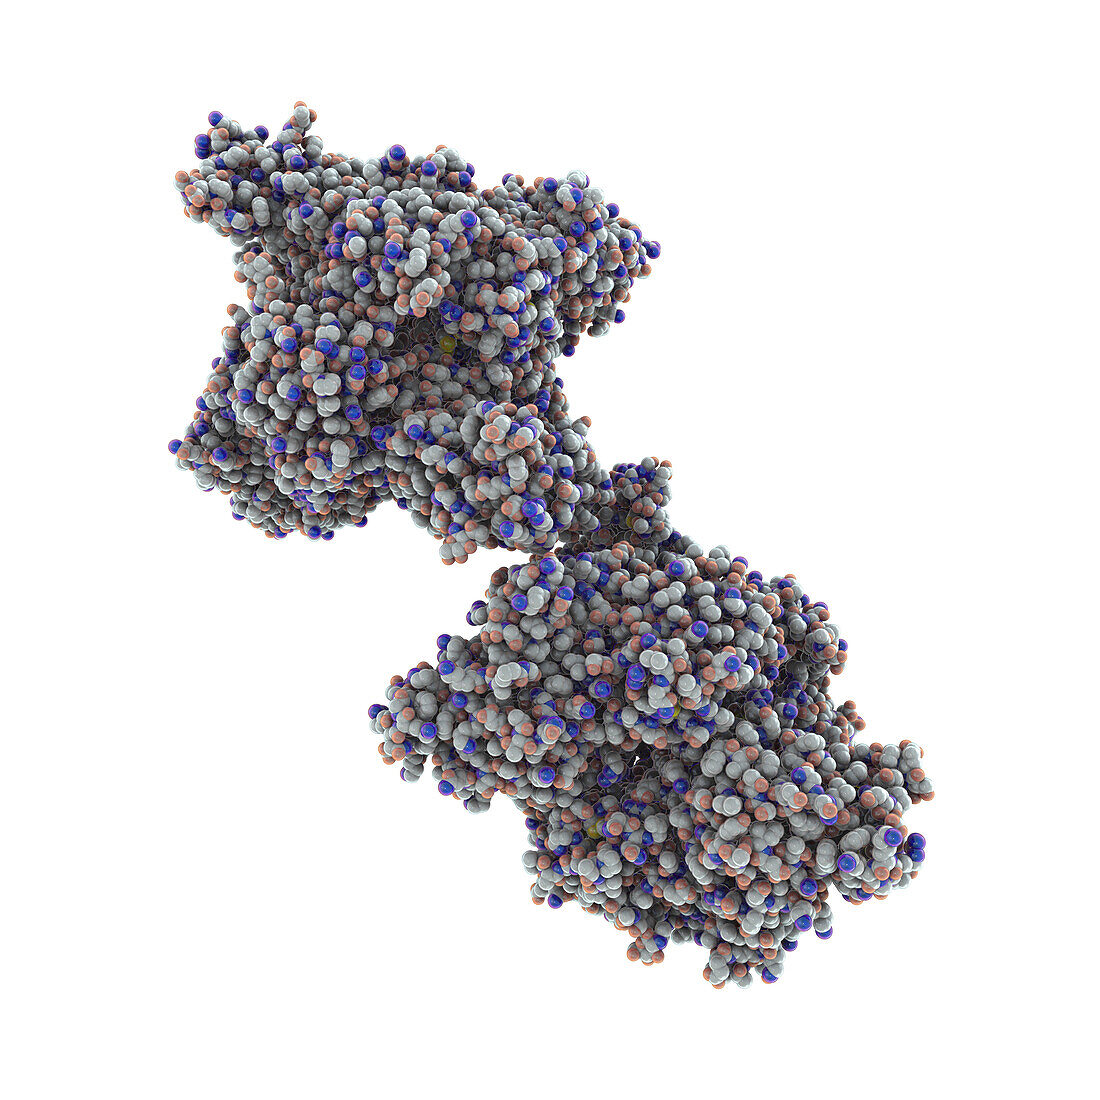 Beta-hexosaminidase A enzyme, illustration